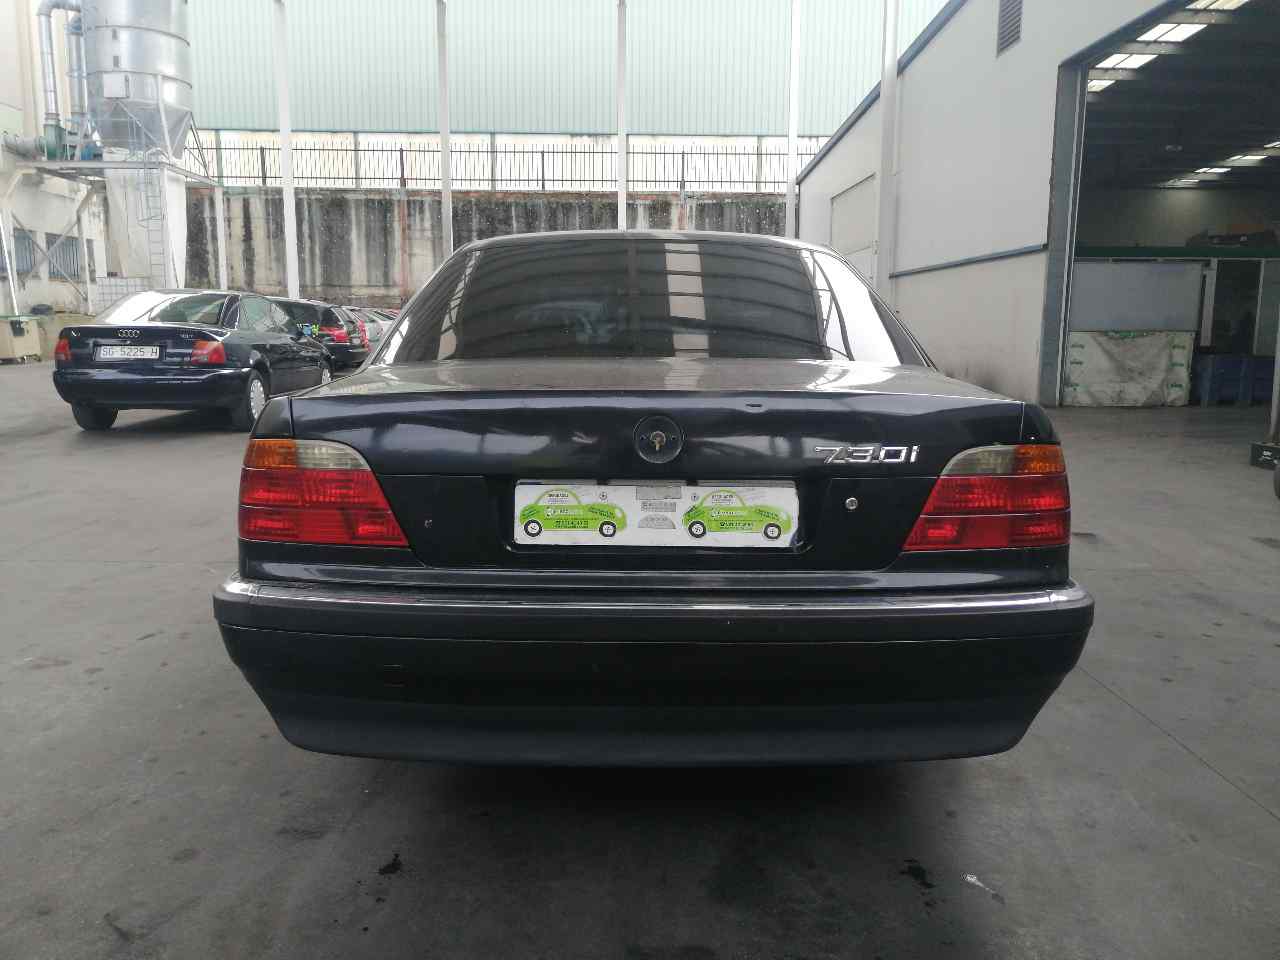 BMW 7 Series E38 (1994-2001) Front Right Seatbelt 8162704, 4PUERTAS 19788743